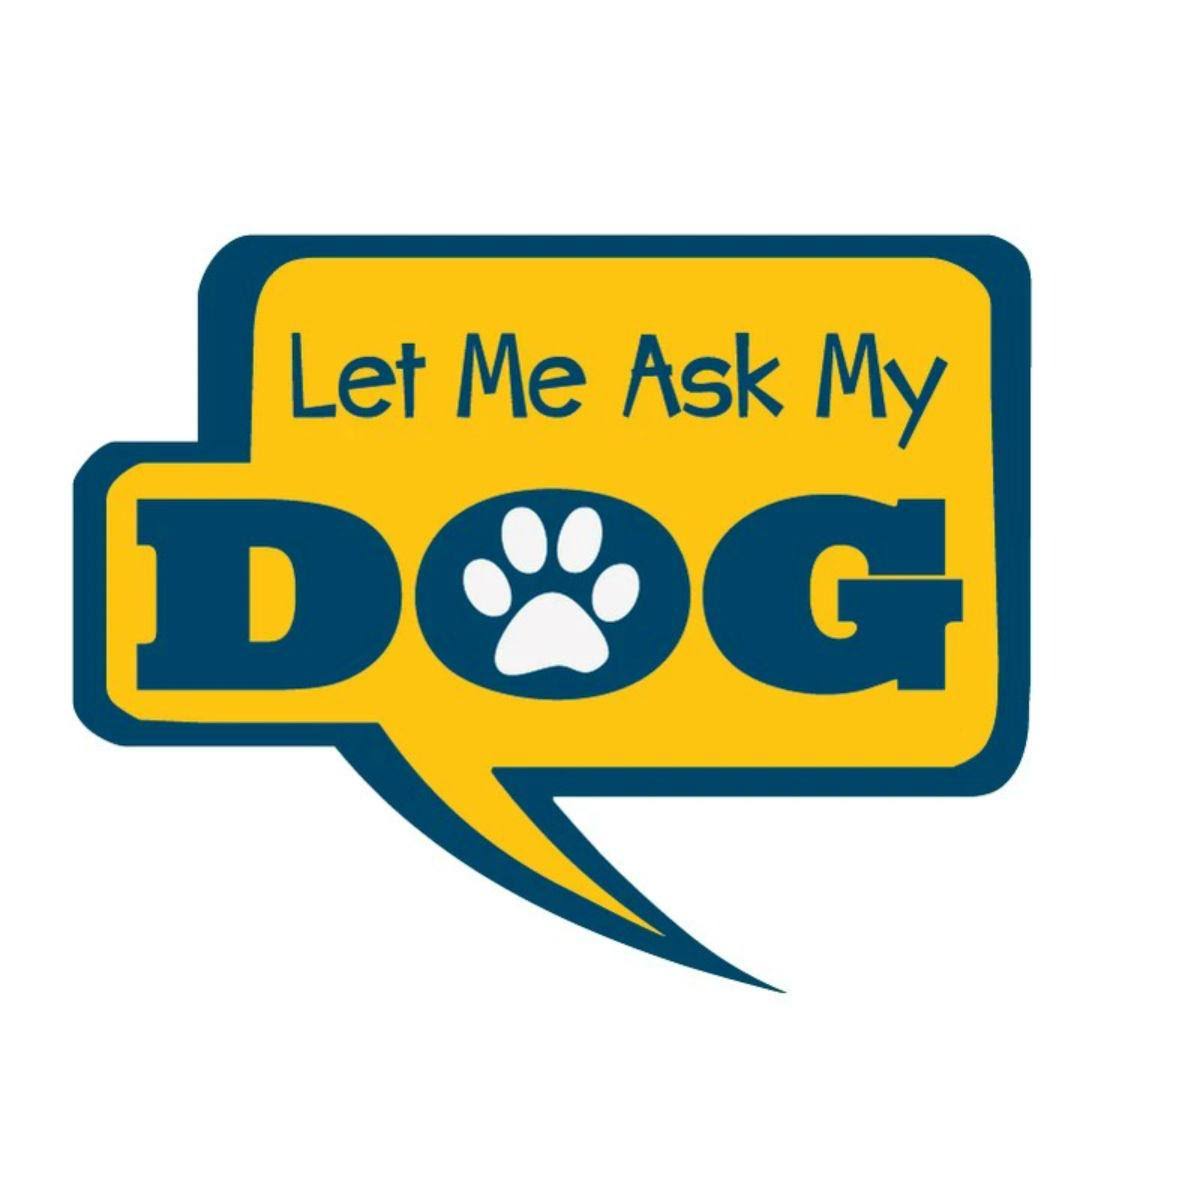 Let Me Ask My Dog Sticker by Dog Speak - 3" Sticker